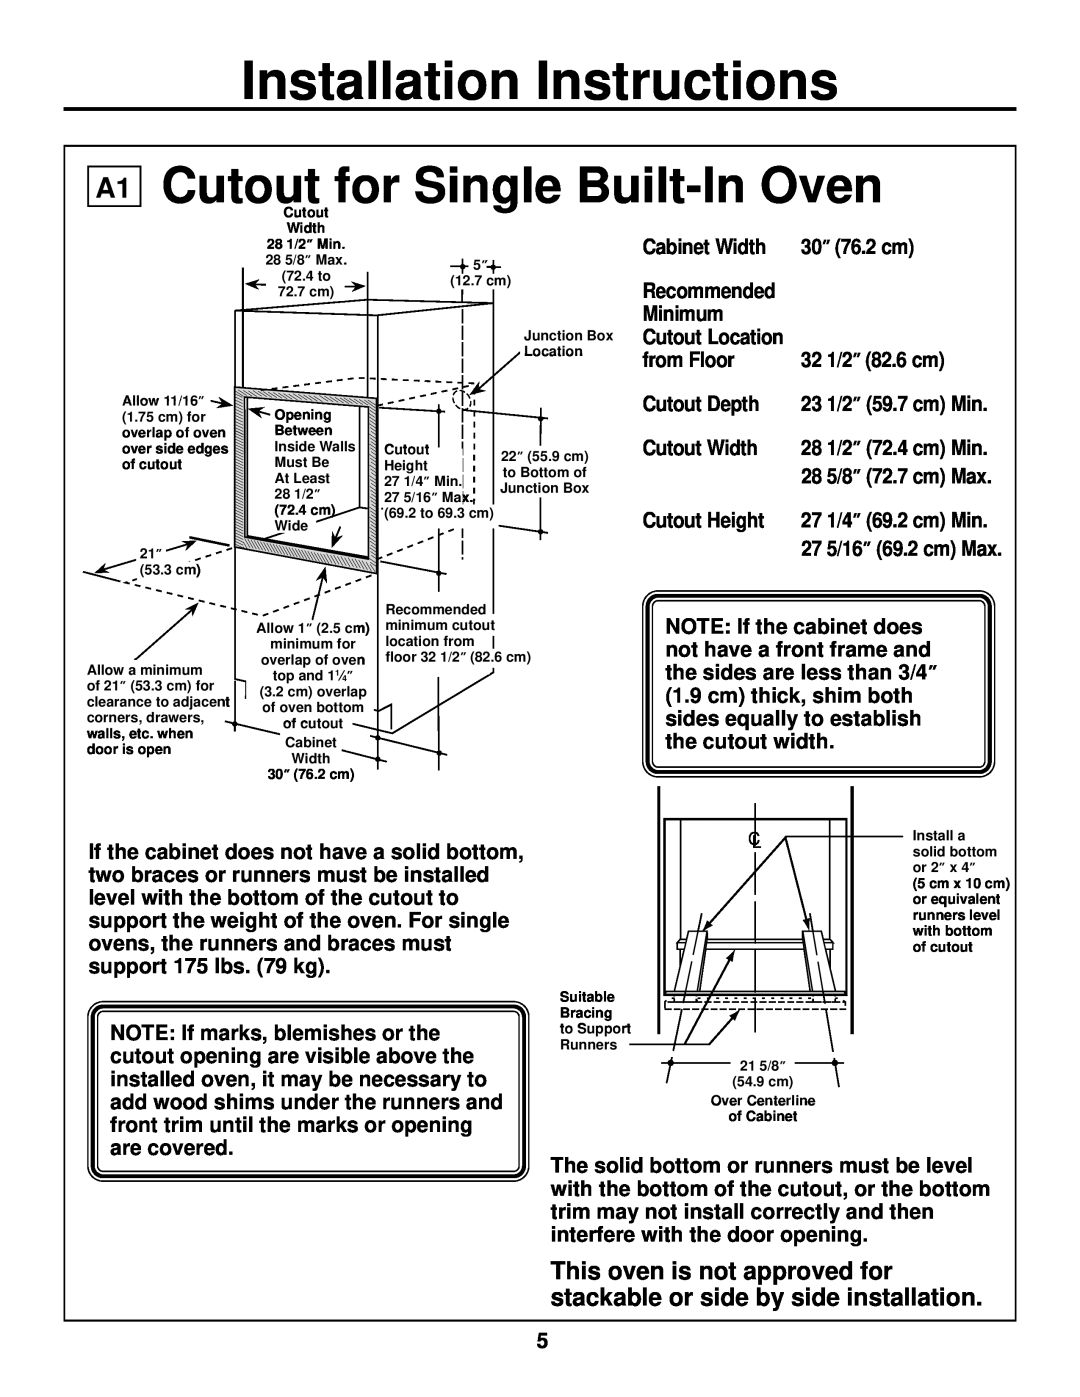 GE ZET1, ZET2 installation instructions A1 Cutout for Single Built-In Oven, Installation Instructions 